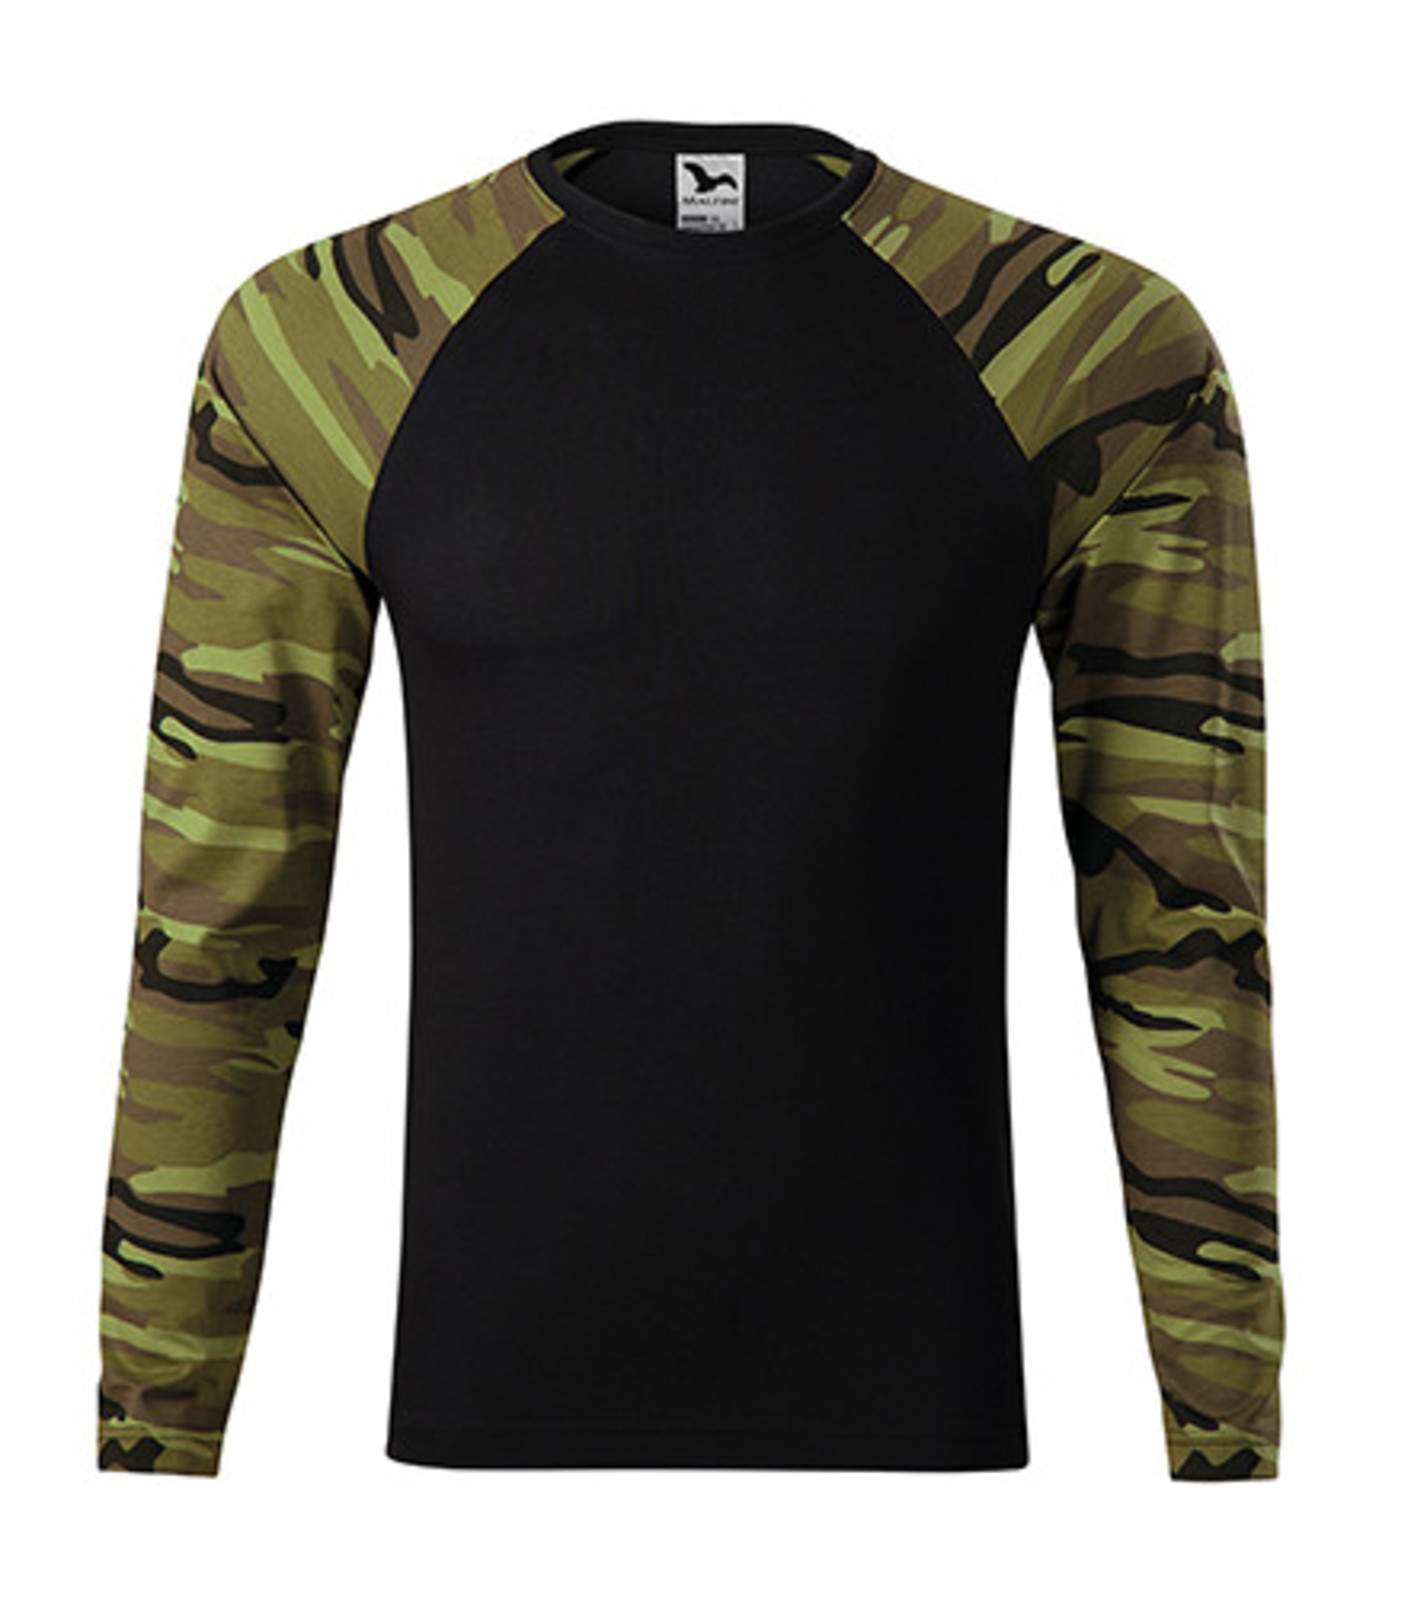 Unisexové tričko Adler Camouflage LS 166 - veľkosť: XL, farba: maskáčová zelená